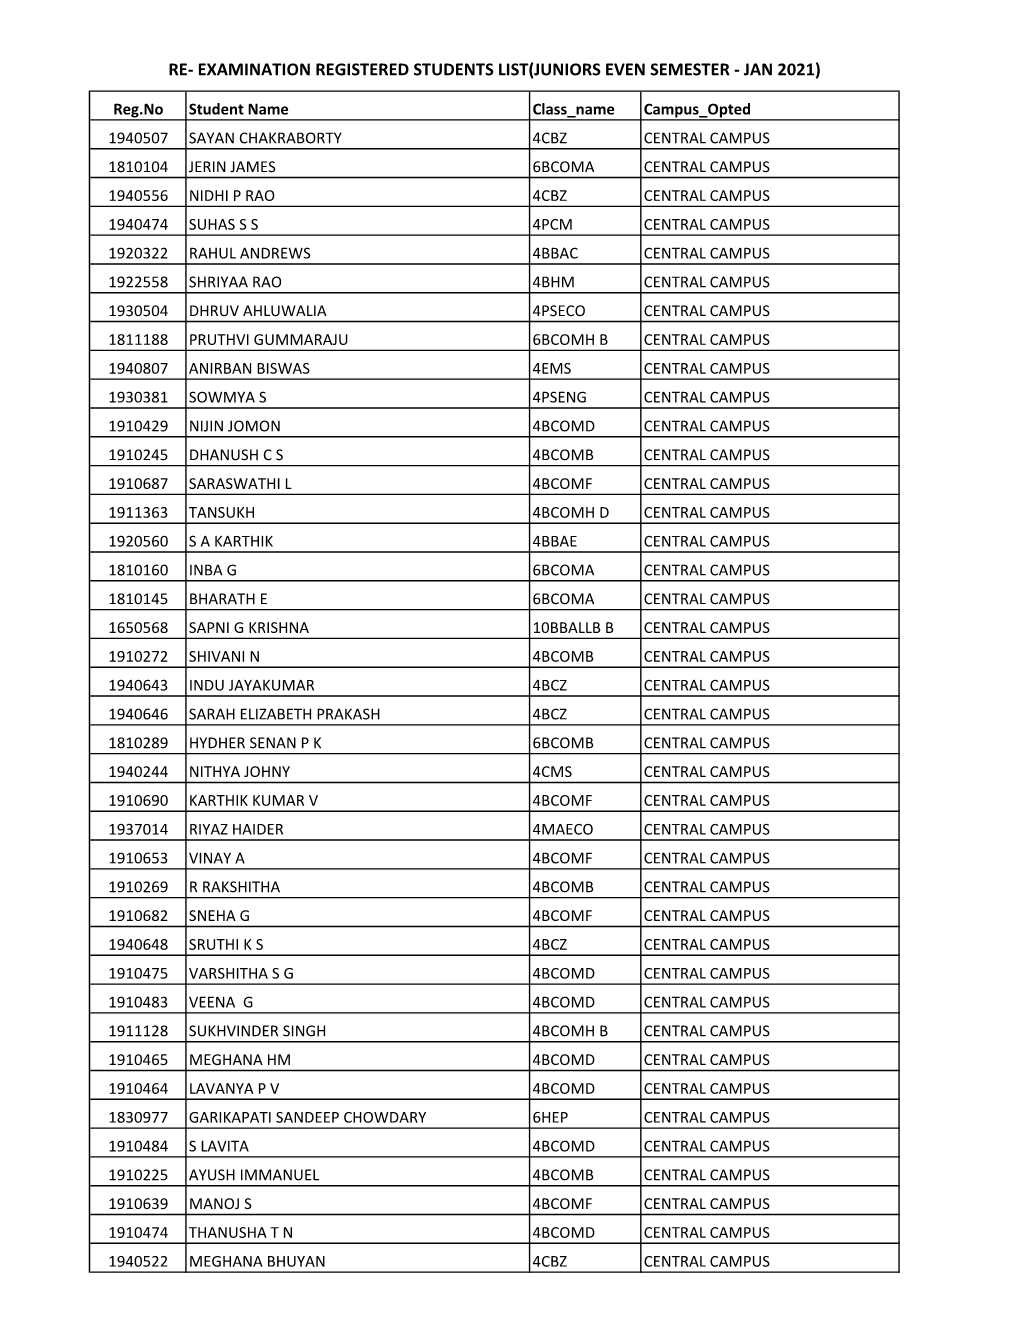 Re- Examination Registered Students List(Juniors Even Semester - Jan 2021)